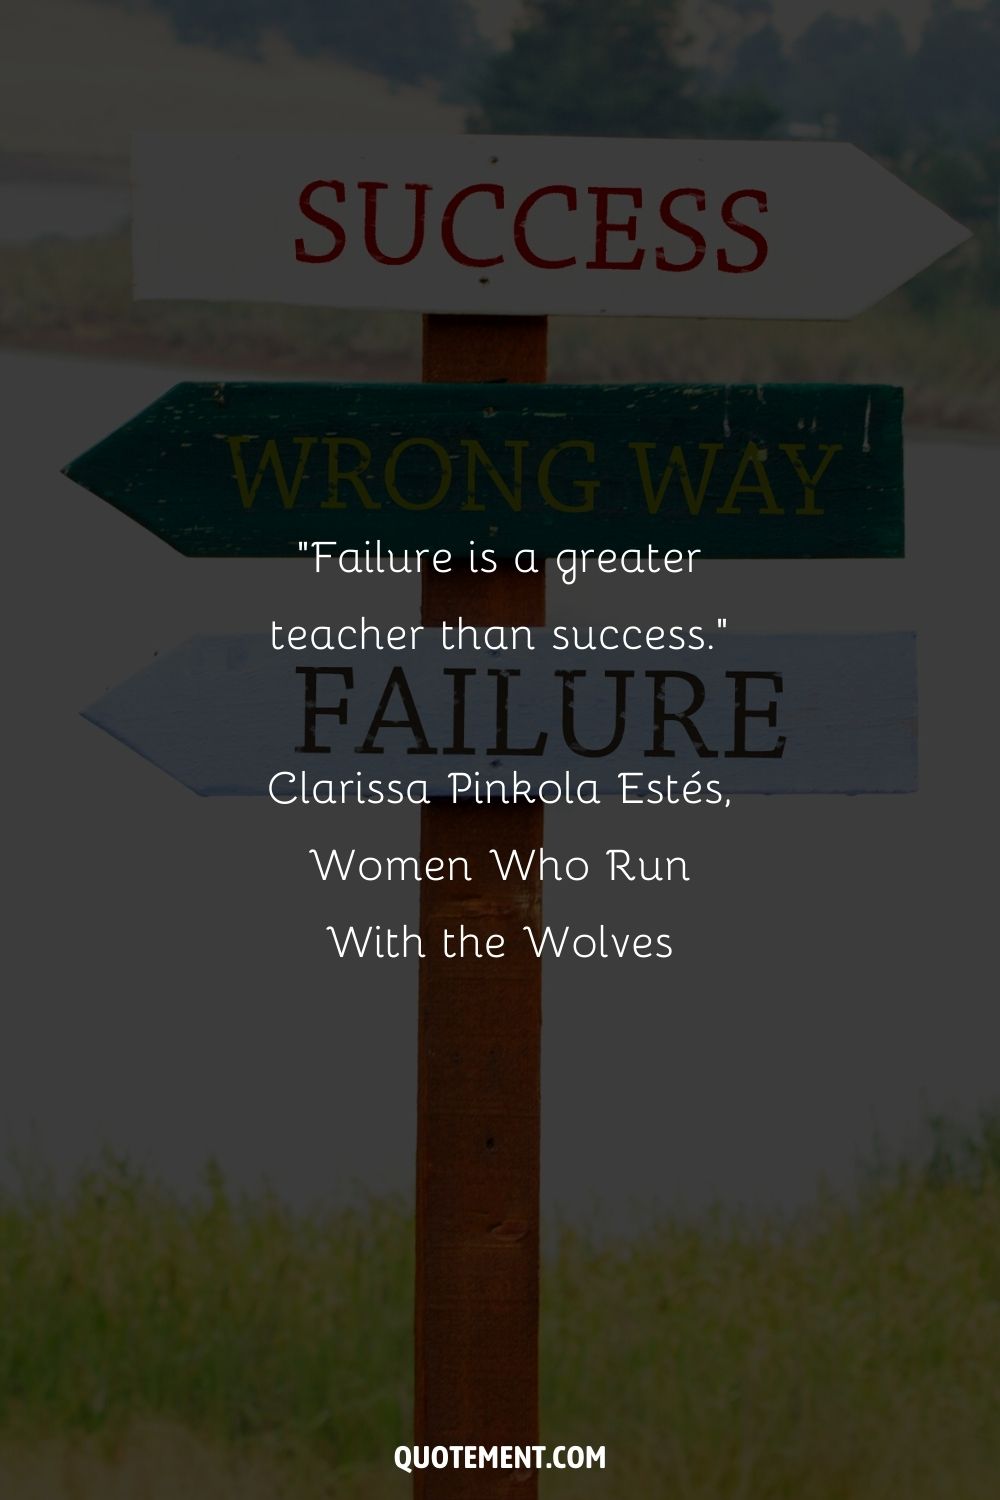 “Failure is a greater teacher than success” ― Clarissa Pinkola Estés, Women Who Run With the Wolves